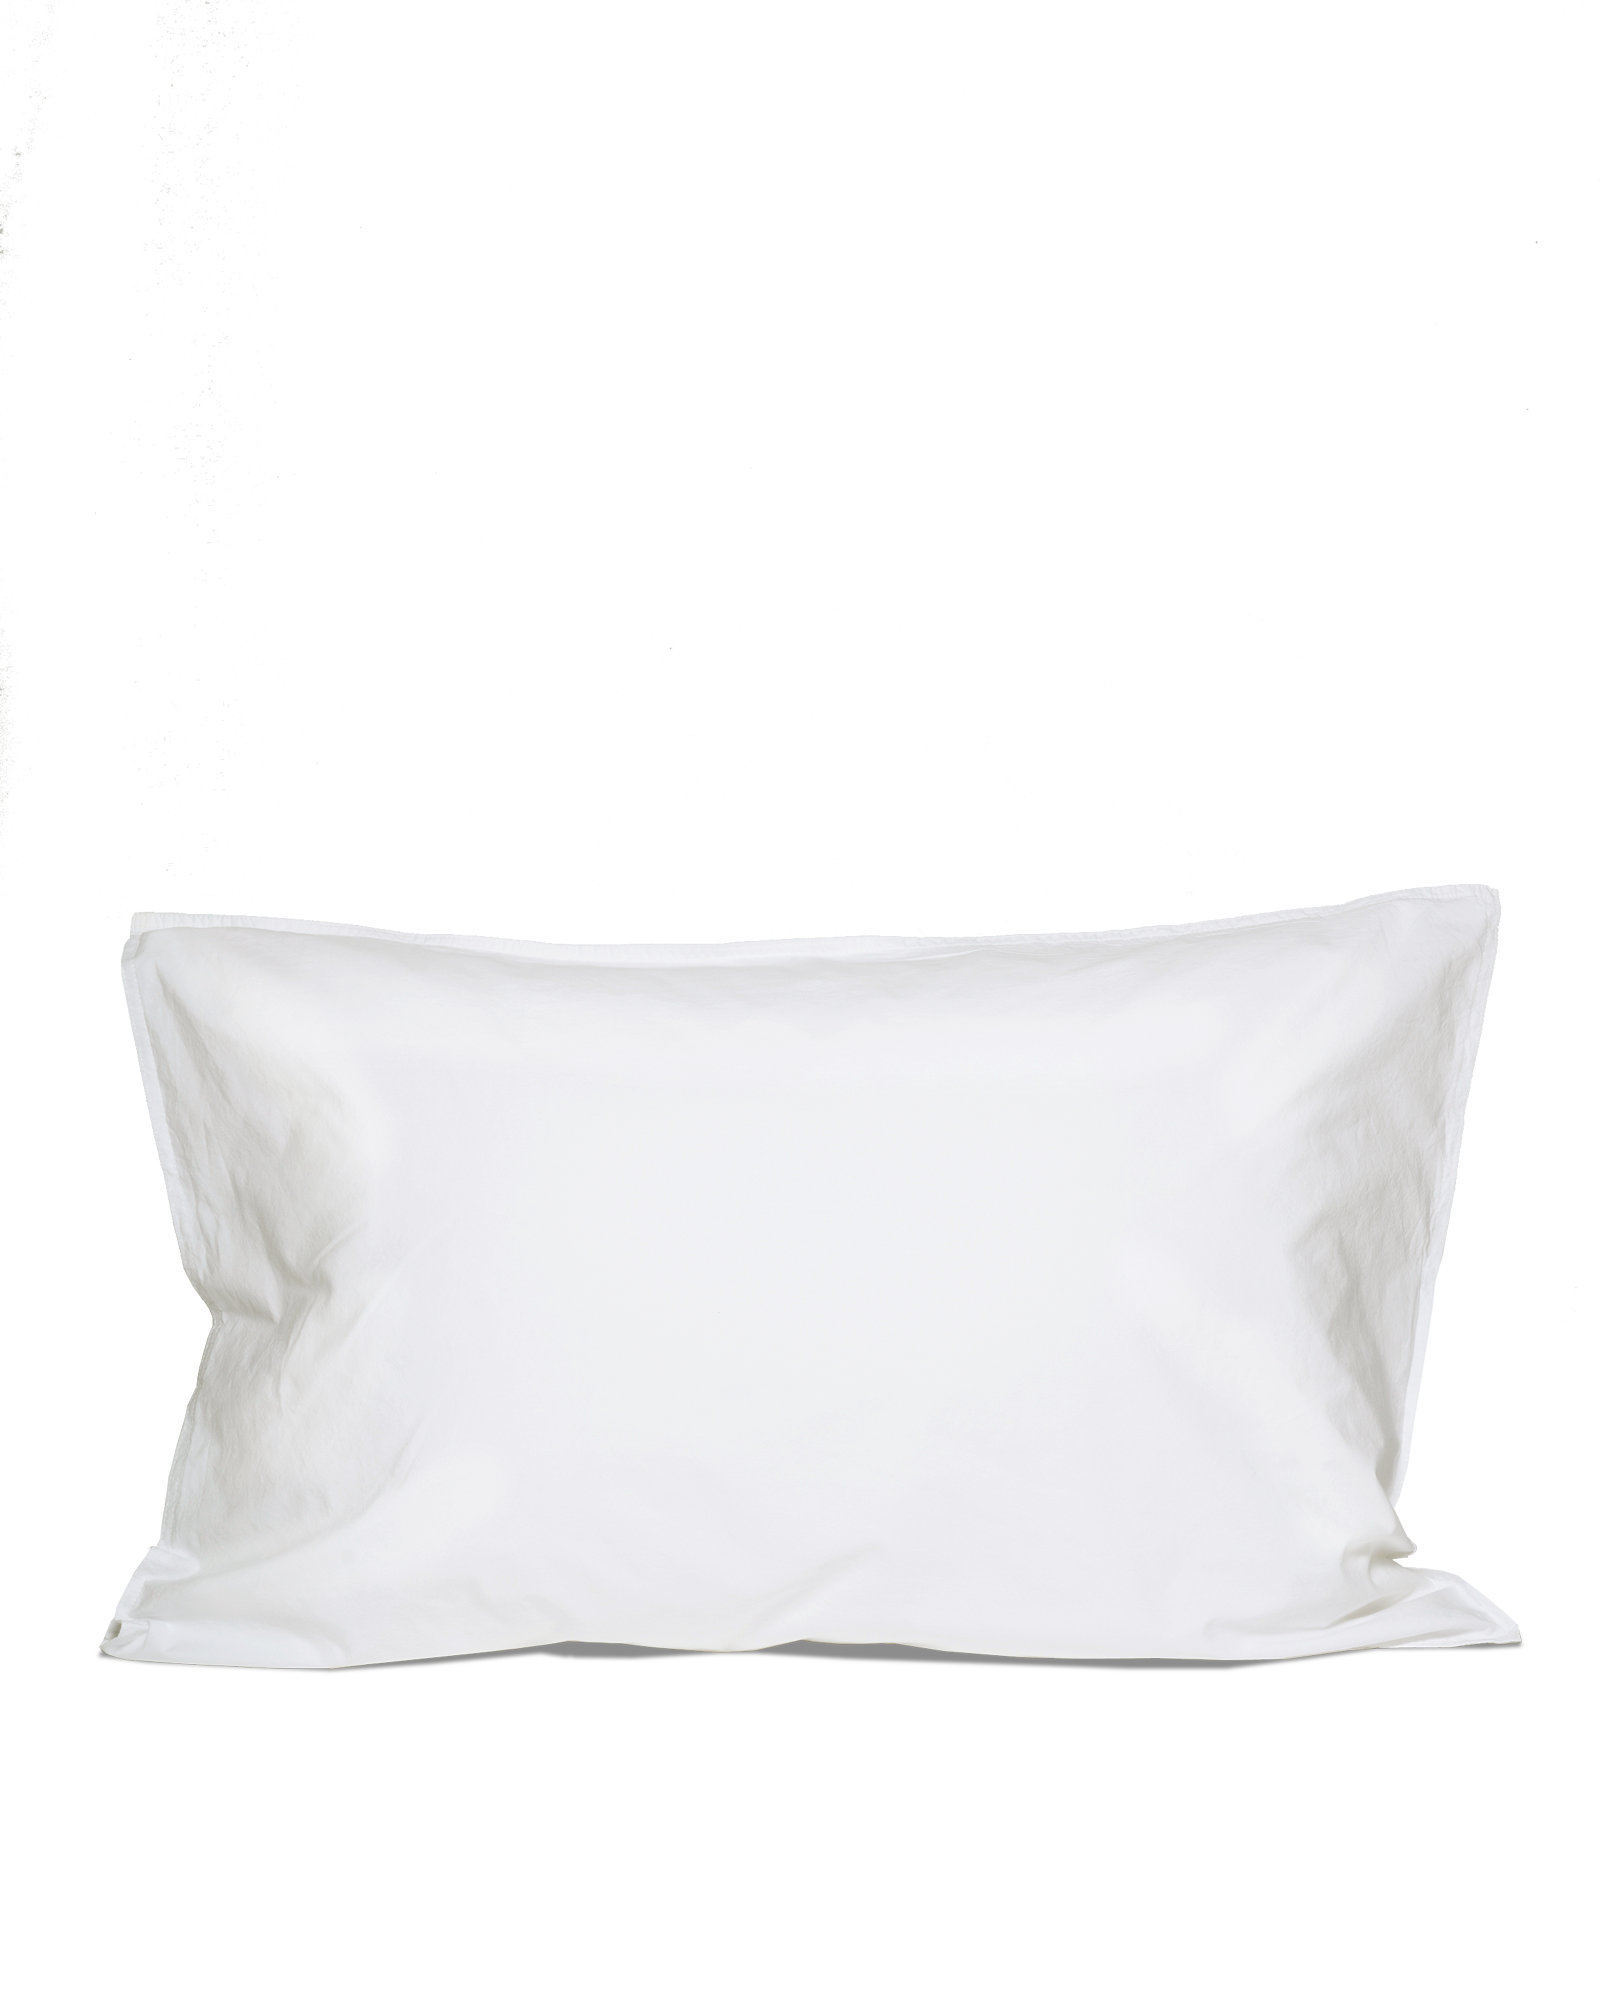 MARIE-MARIE - Pillowcase SLEEPY SATEEN White - 50x75 cm - White